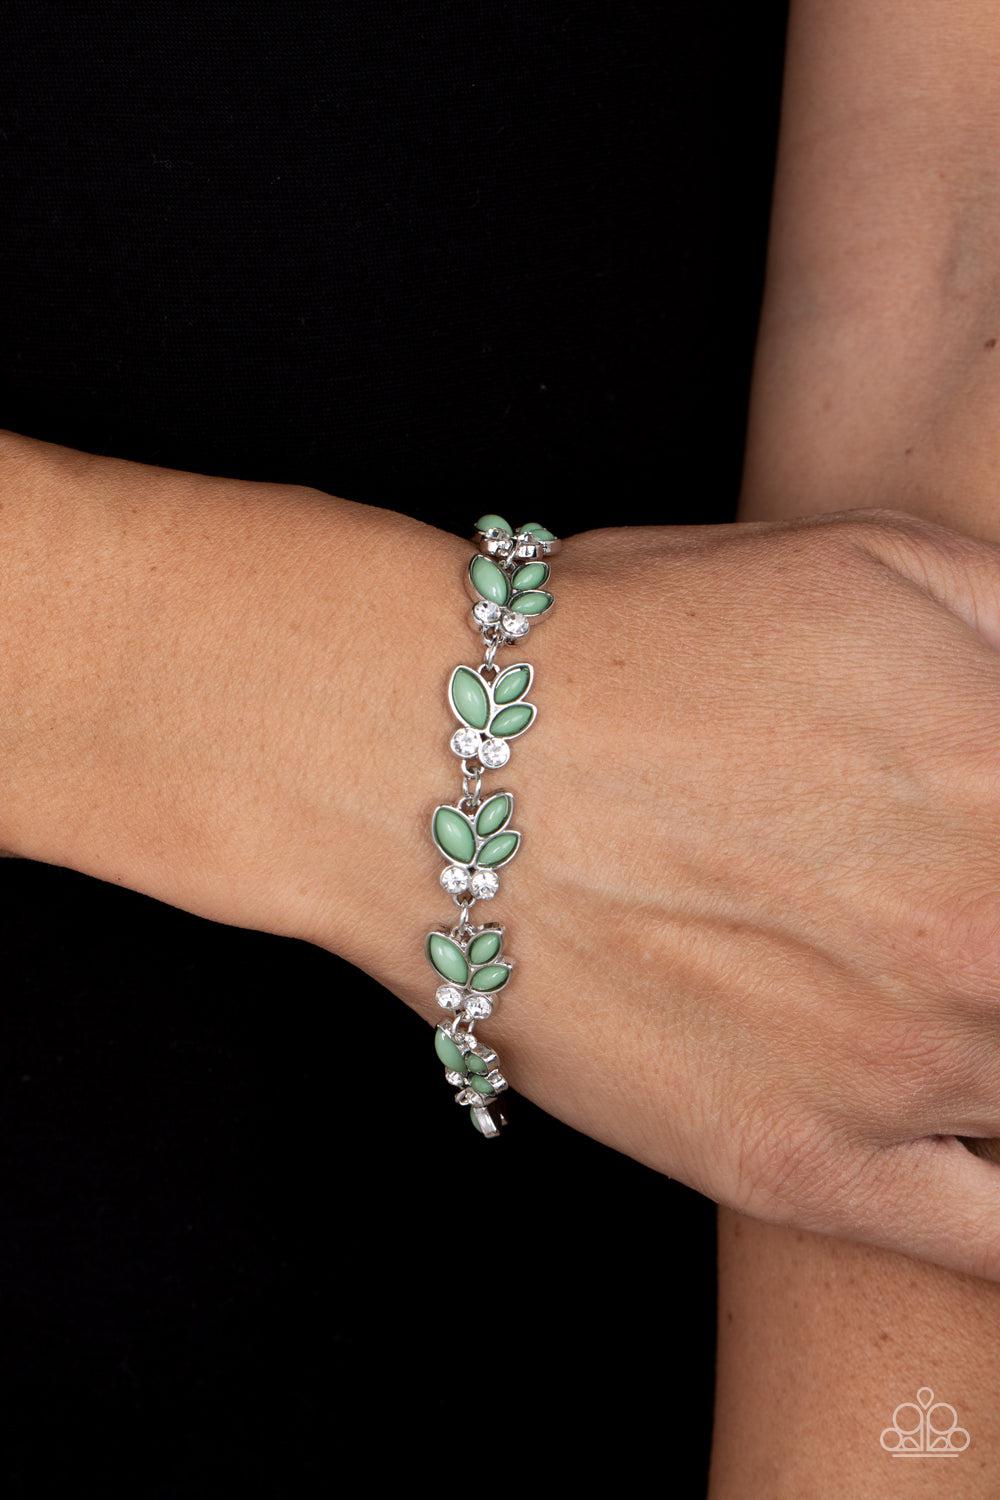 Vineyard Variety Green Bracelet - Paparazzi Accessories- lightbox - CarasShop.com - $5 Jewelry by Cara Jewels